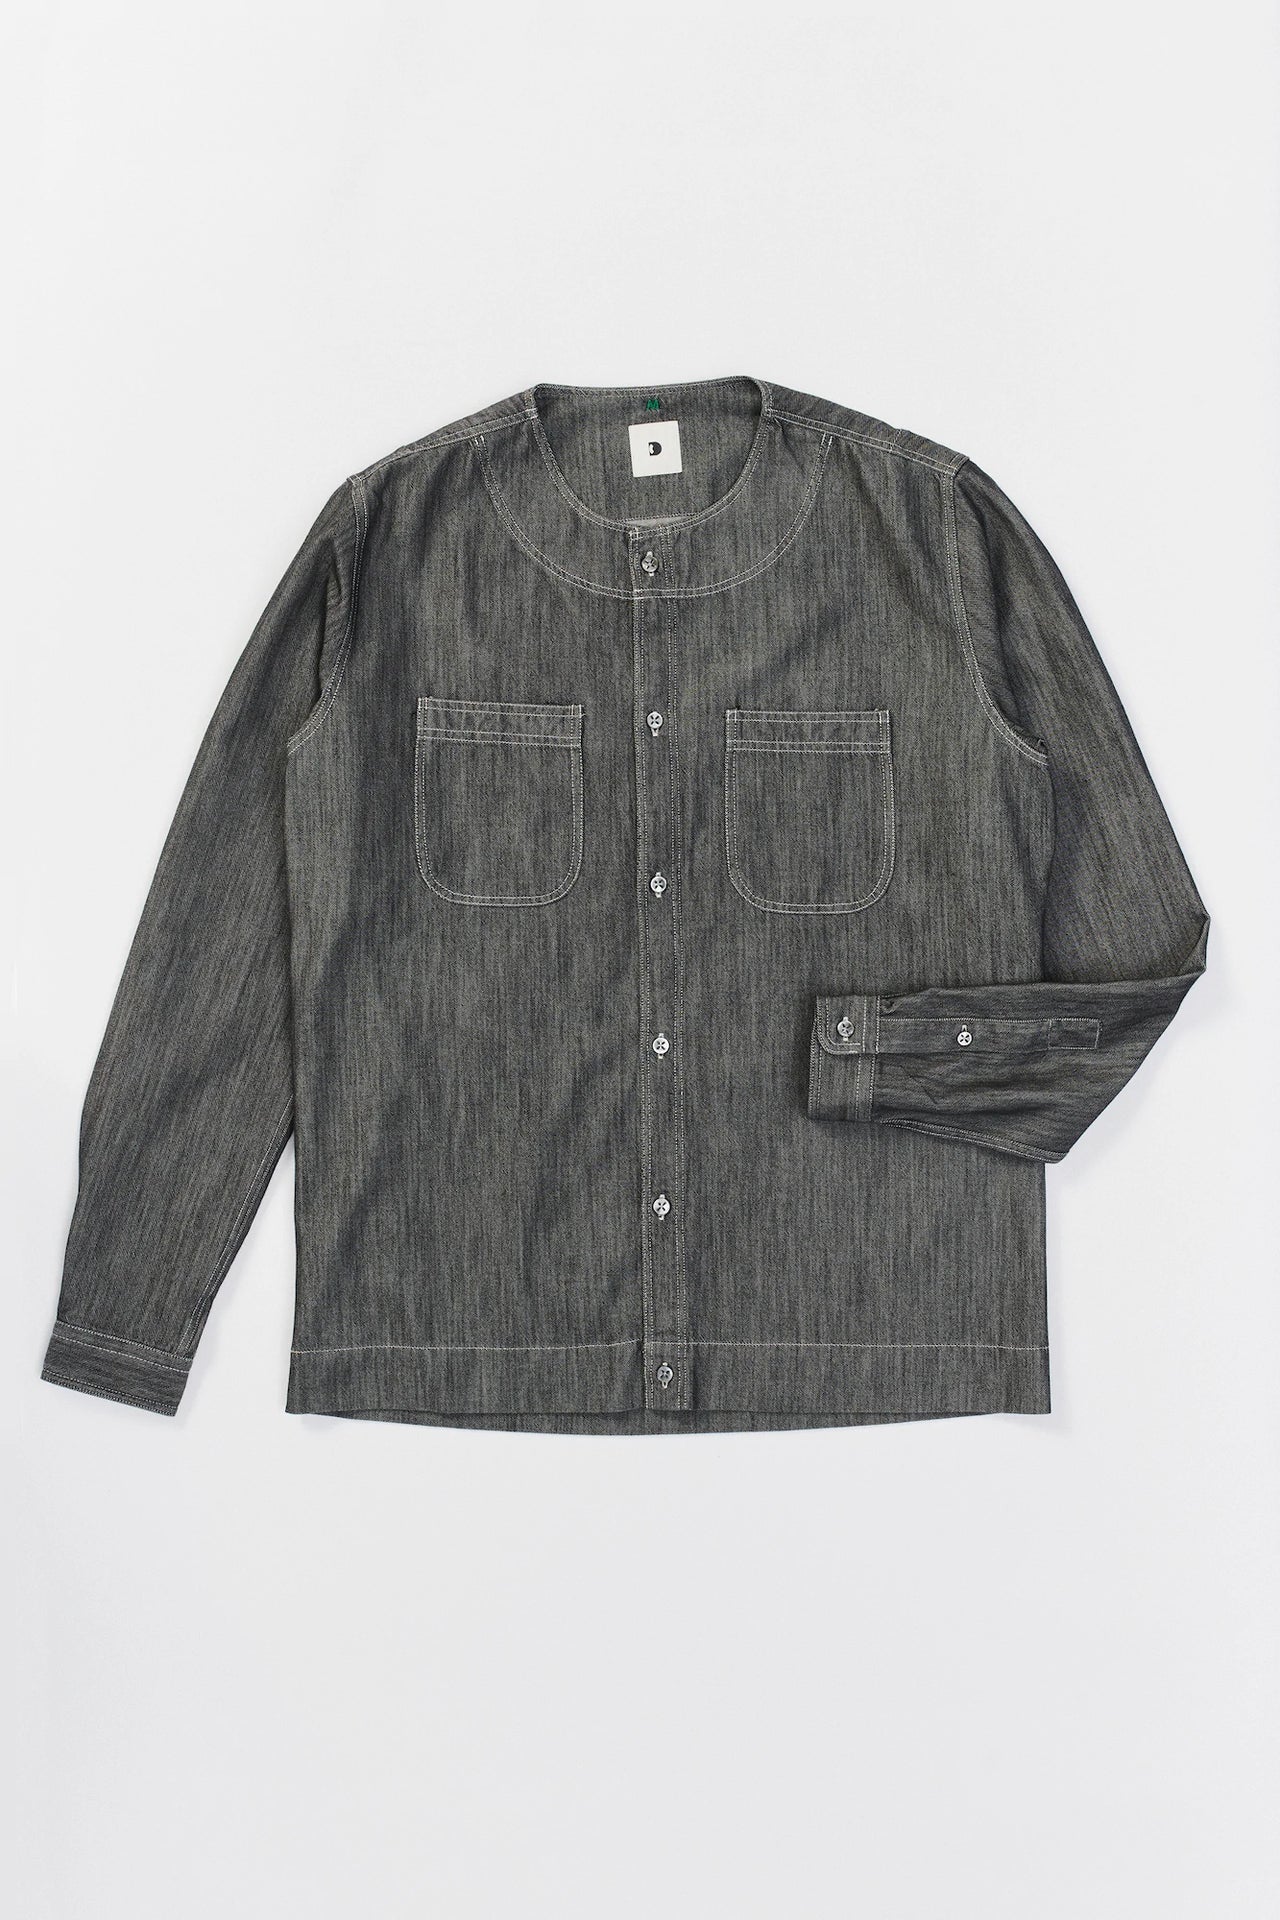 Collarless Carpenter Overshirt in a Grey Indigo Italian Cotton Denim